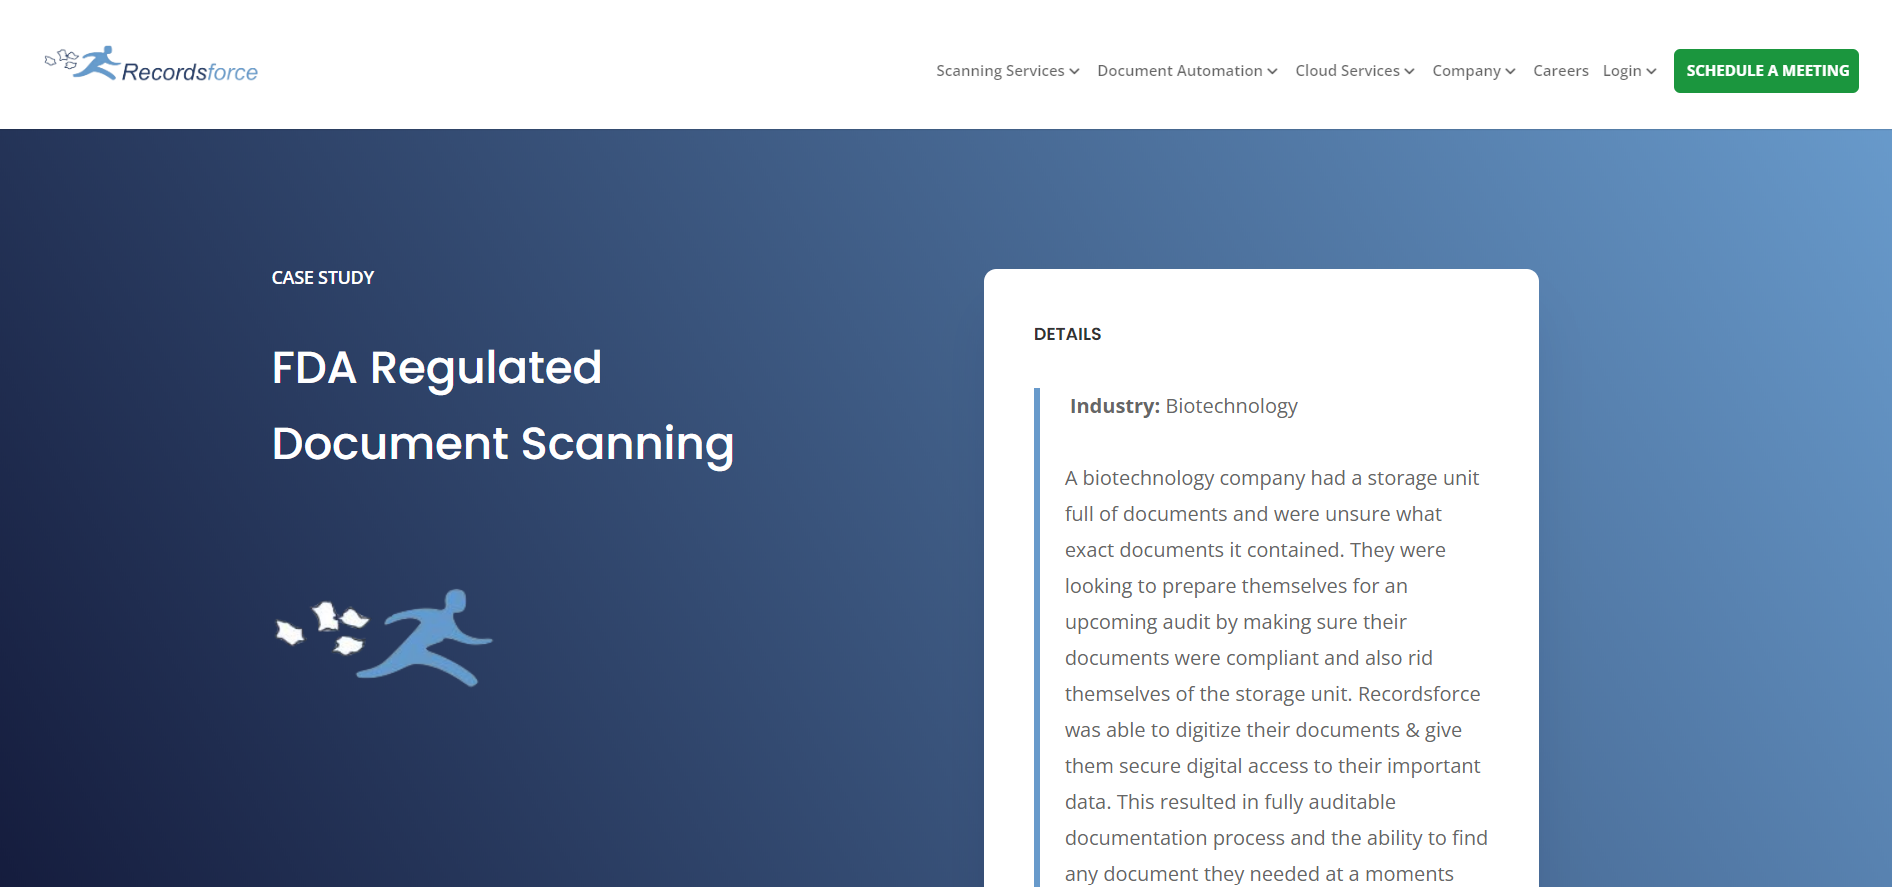 fda regulated biotech document scanning case study